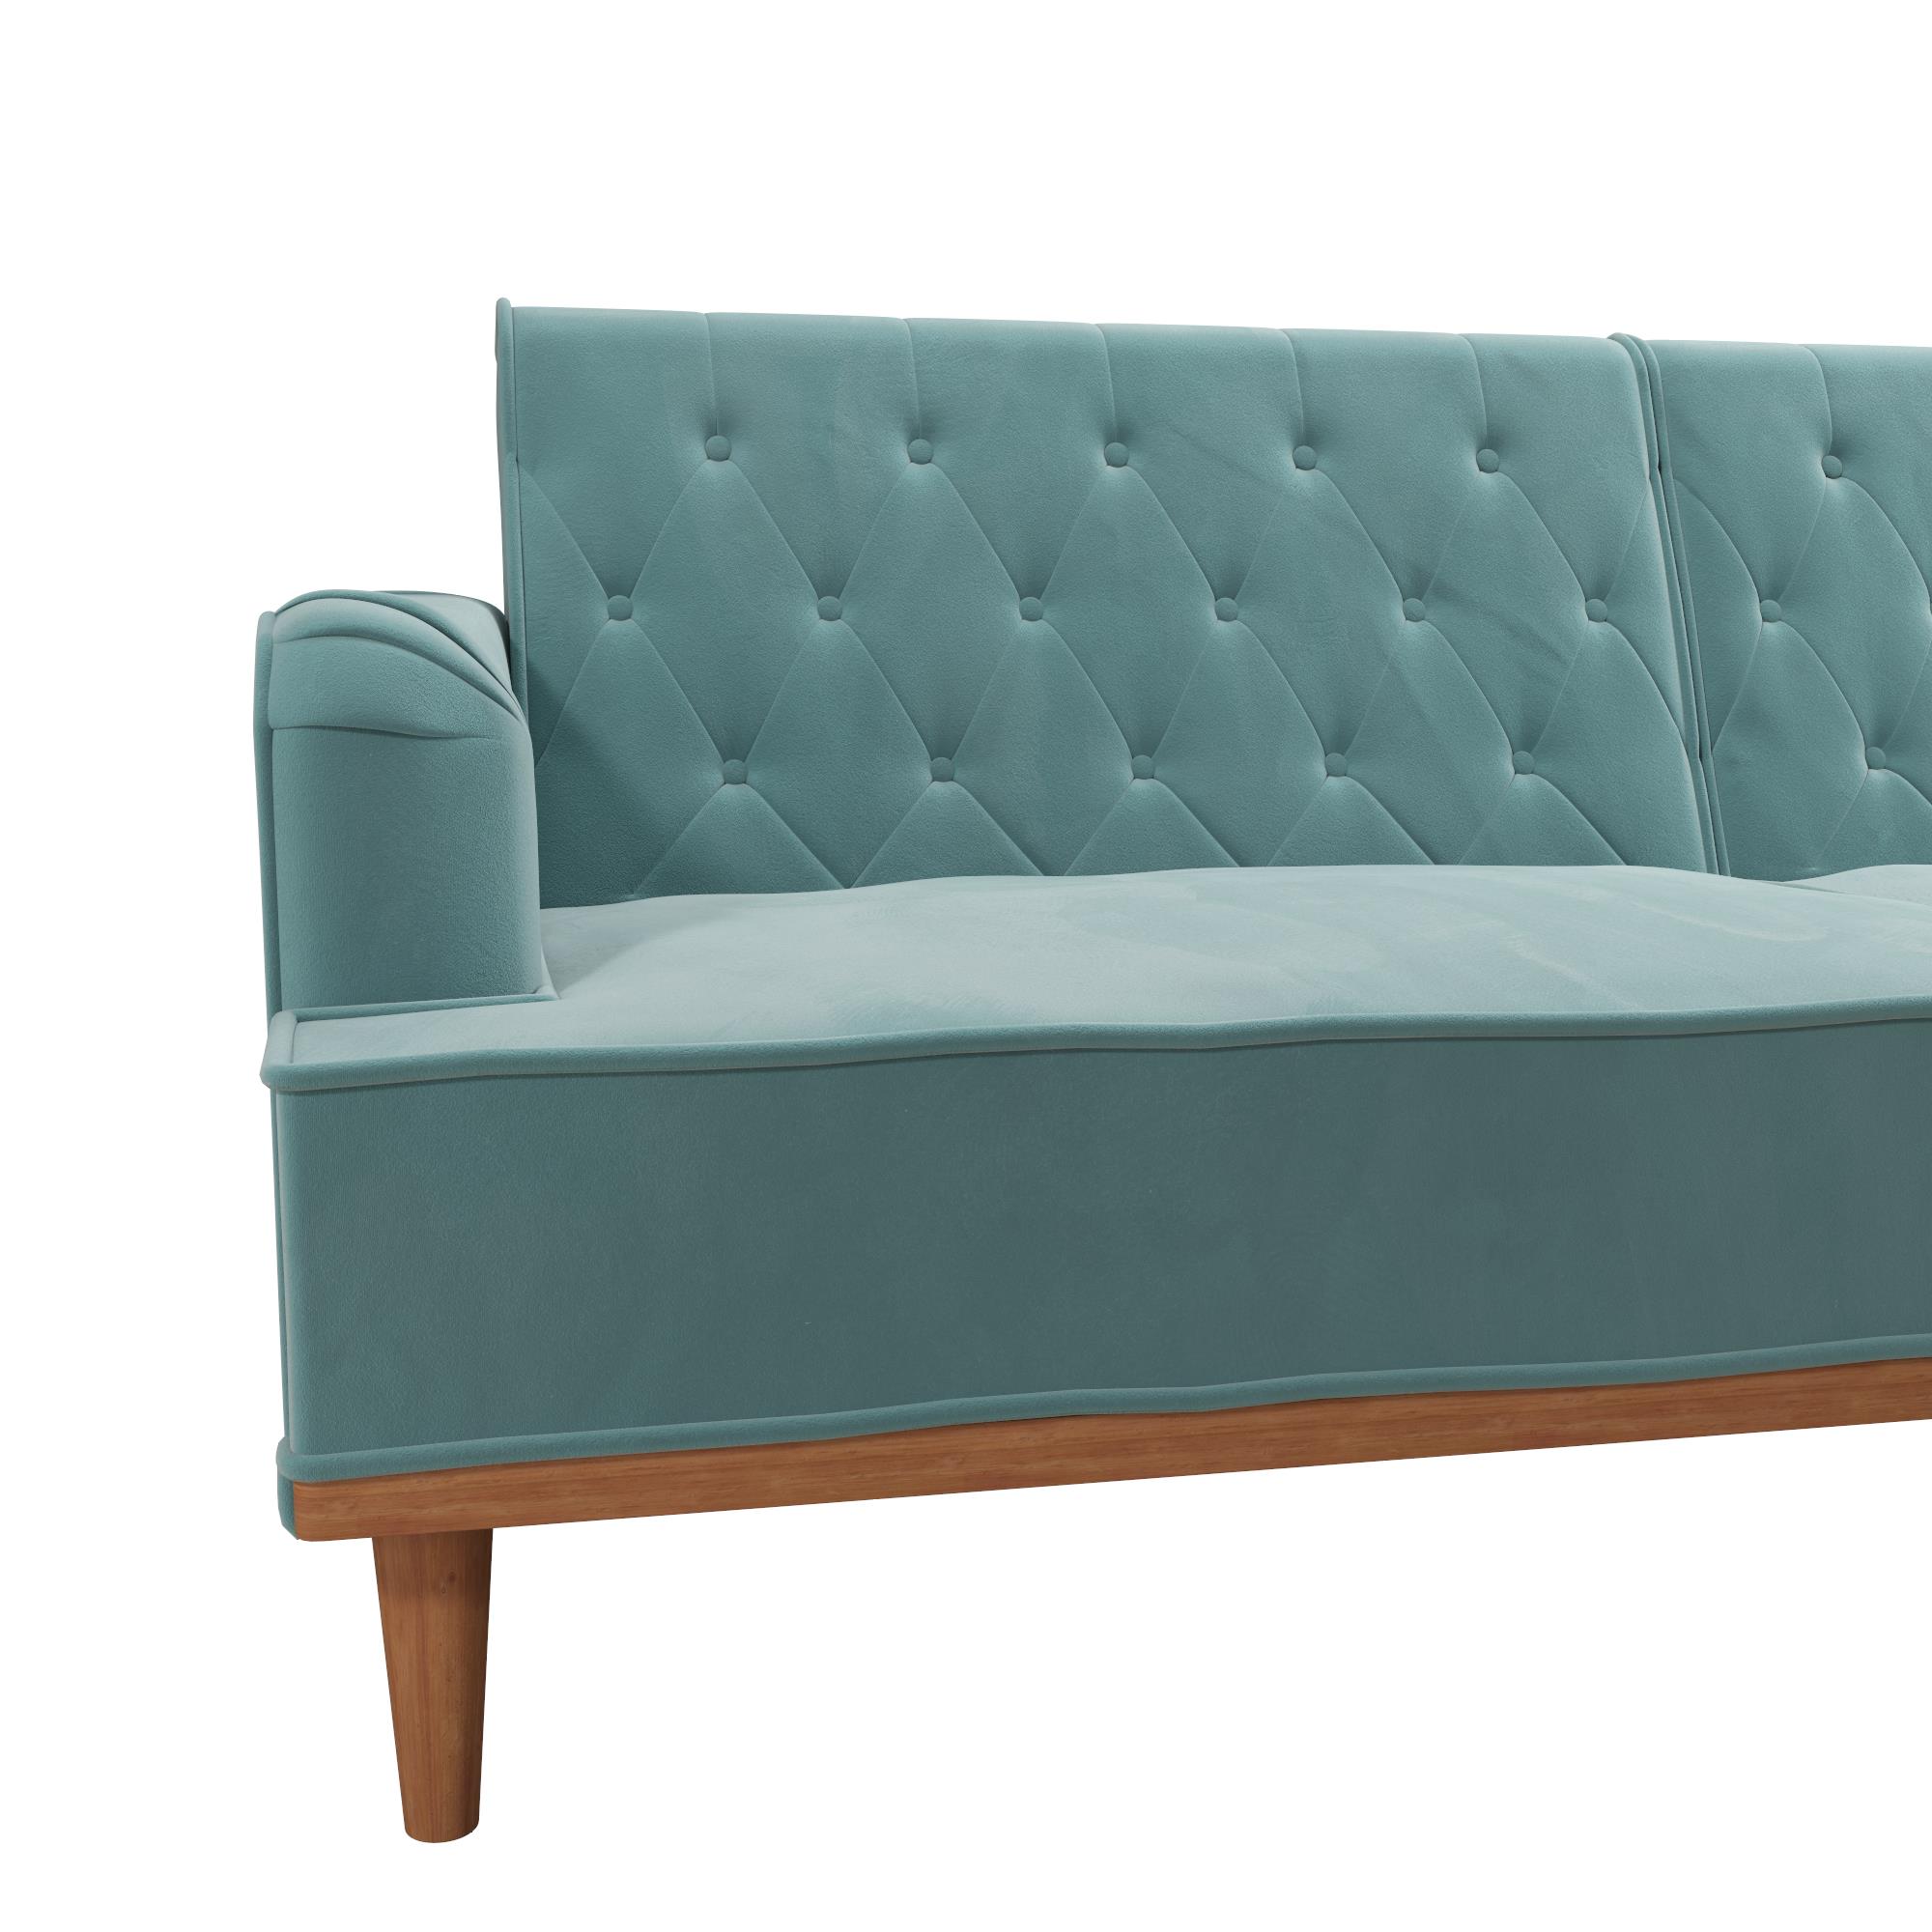 Mr. Kate Stella Vintage Convertible Sofa Bed Futon, Teal Velvet - image 3 of 27